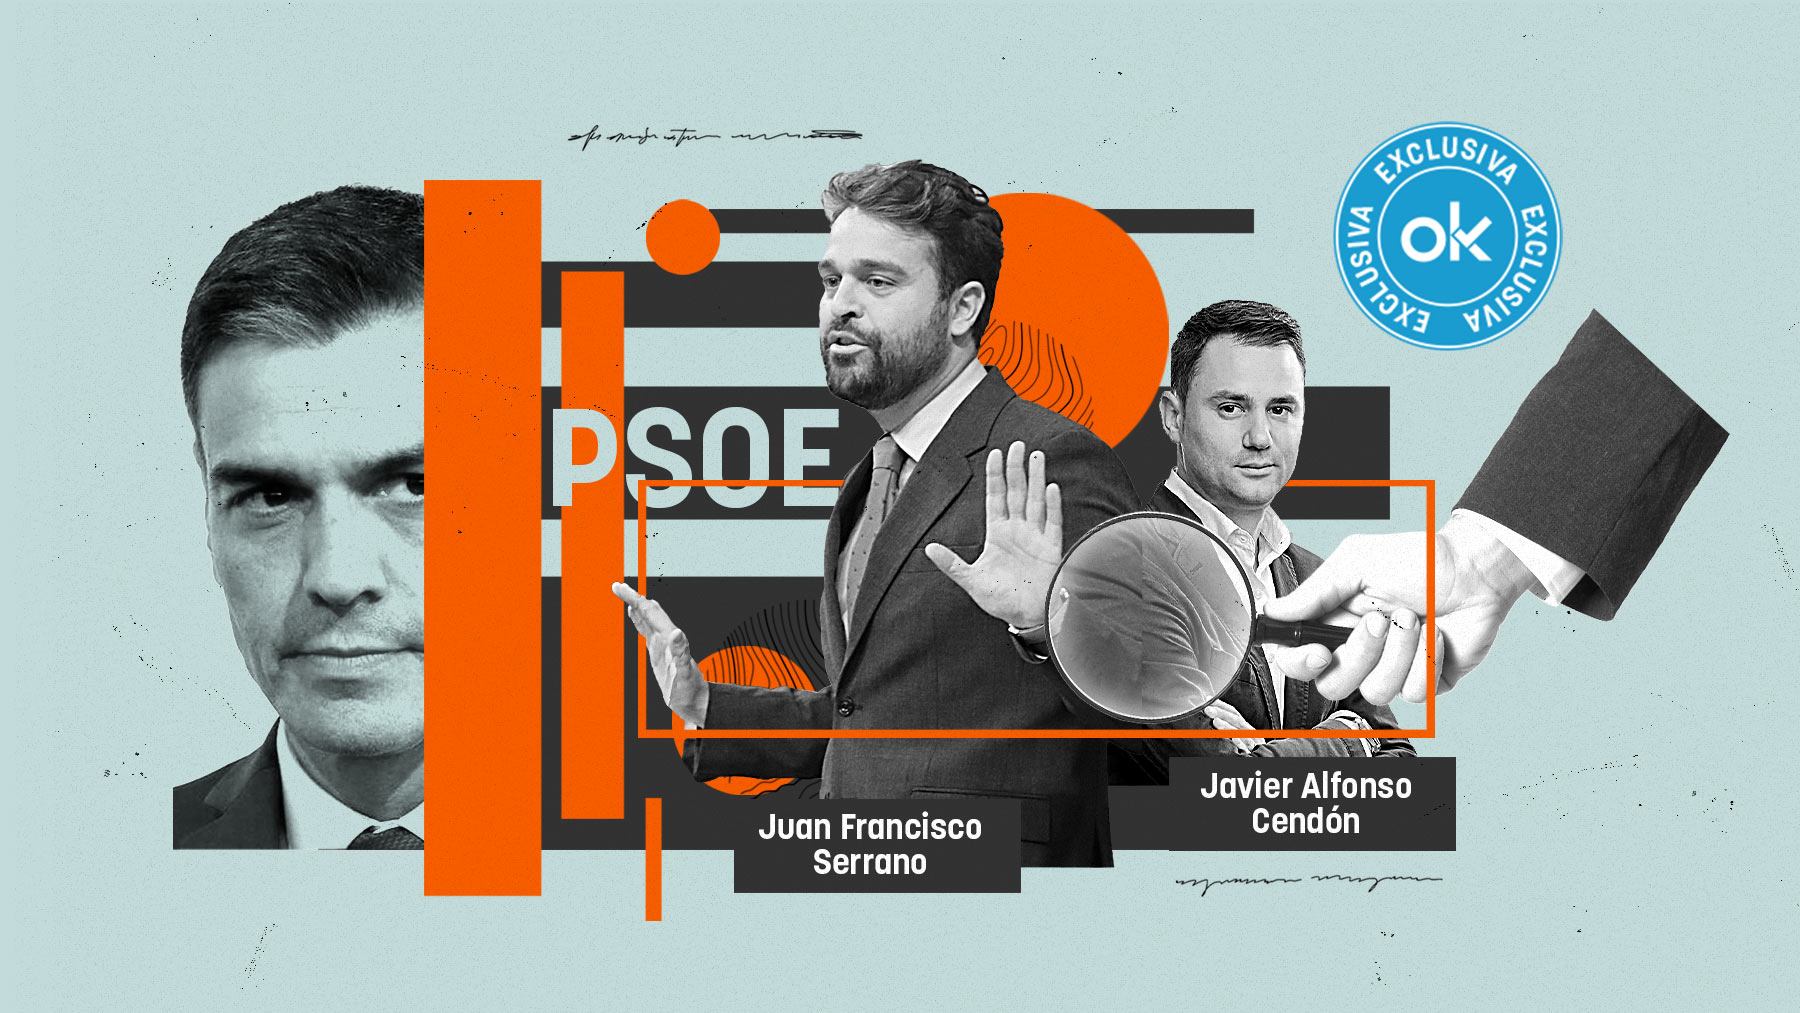 Los diputados del PSOE Juan Fransisco Serrano y Javier Alfonso Cendón